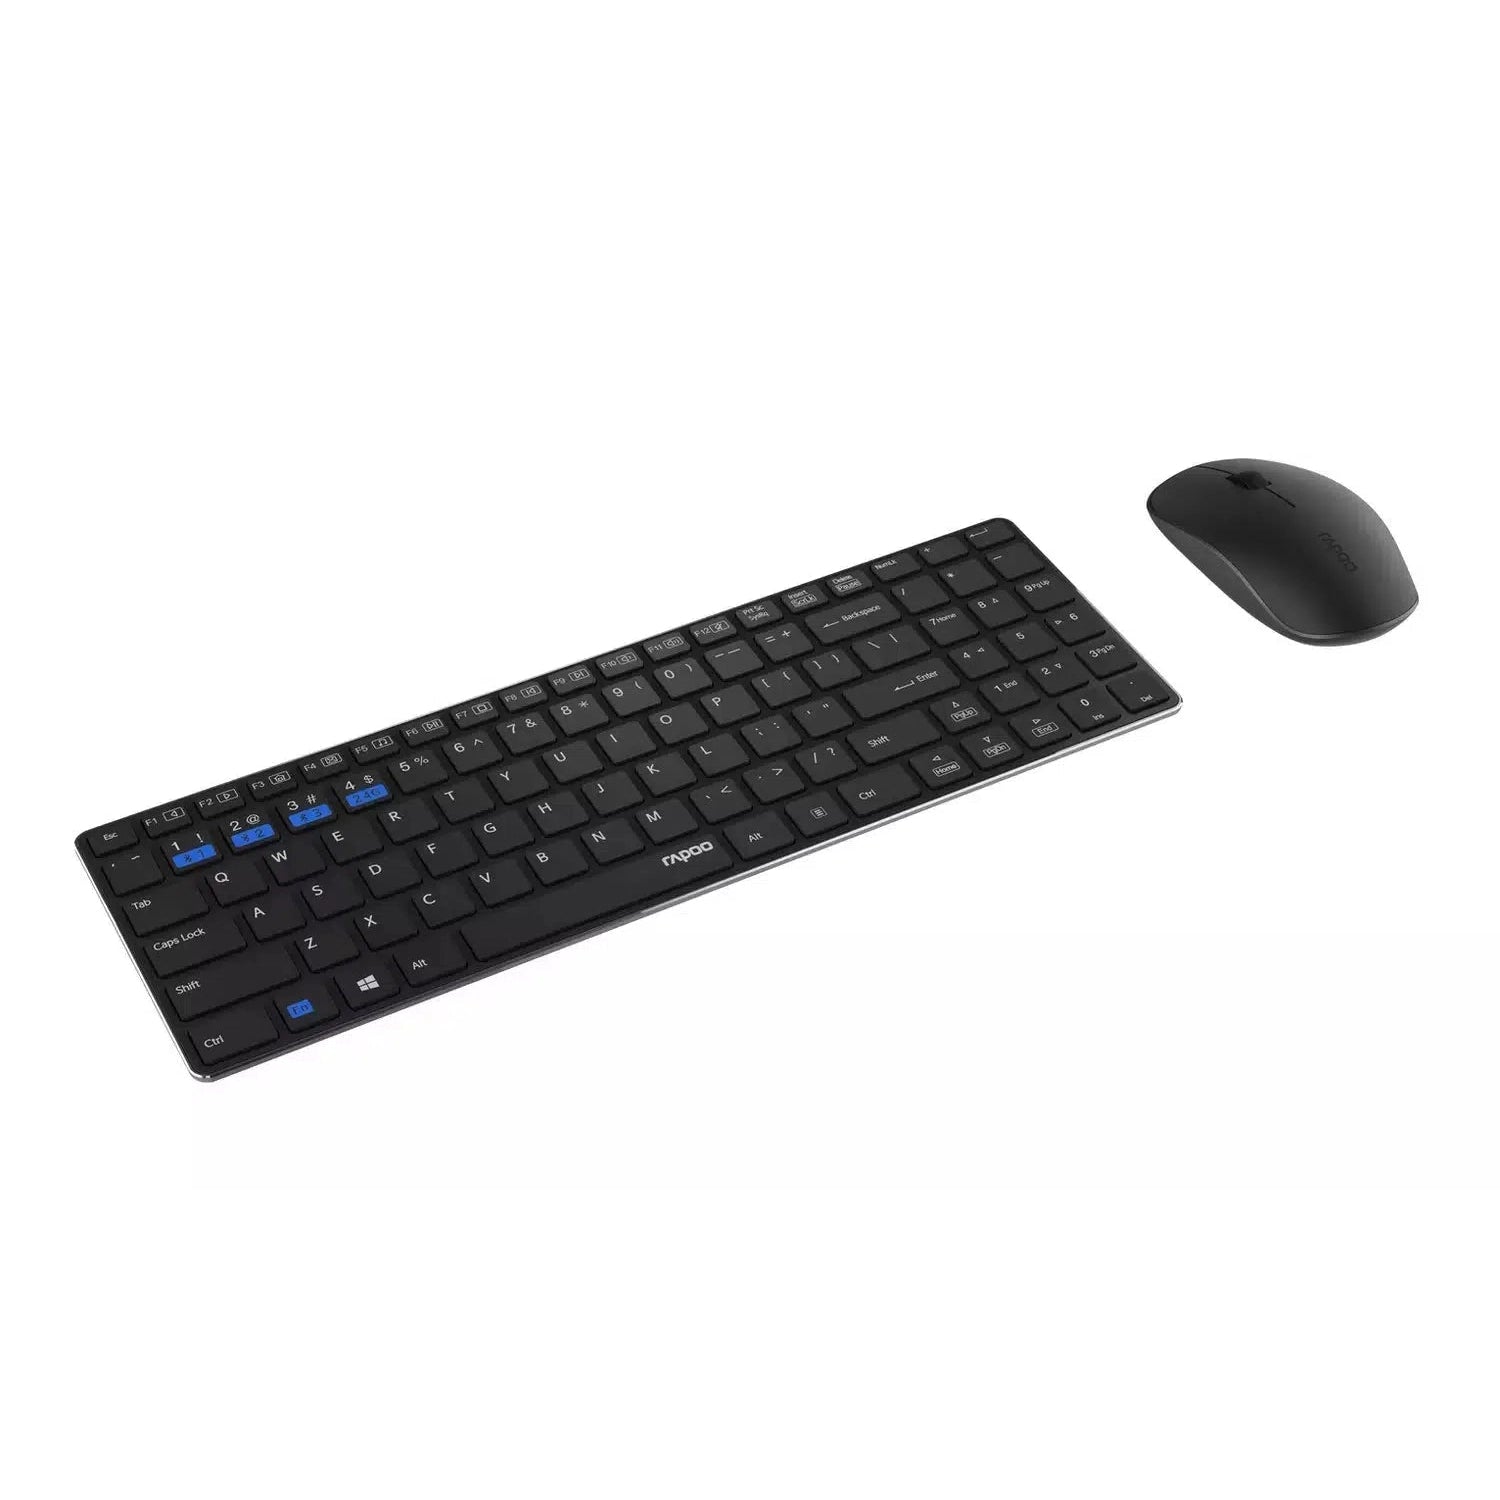 Rapoo 9300M Wireless Keyboard Only, Black - Refurbished Good